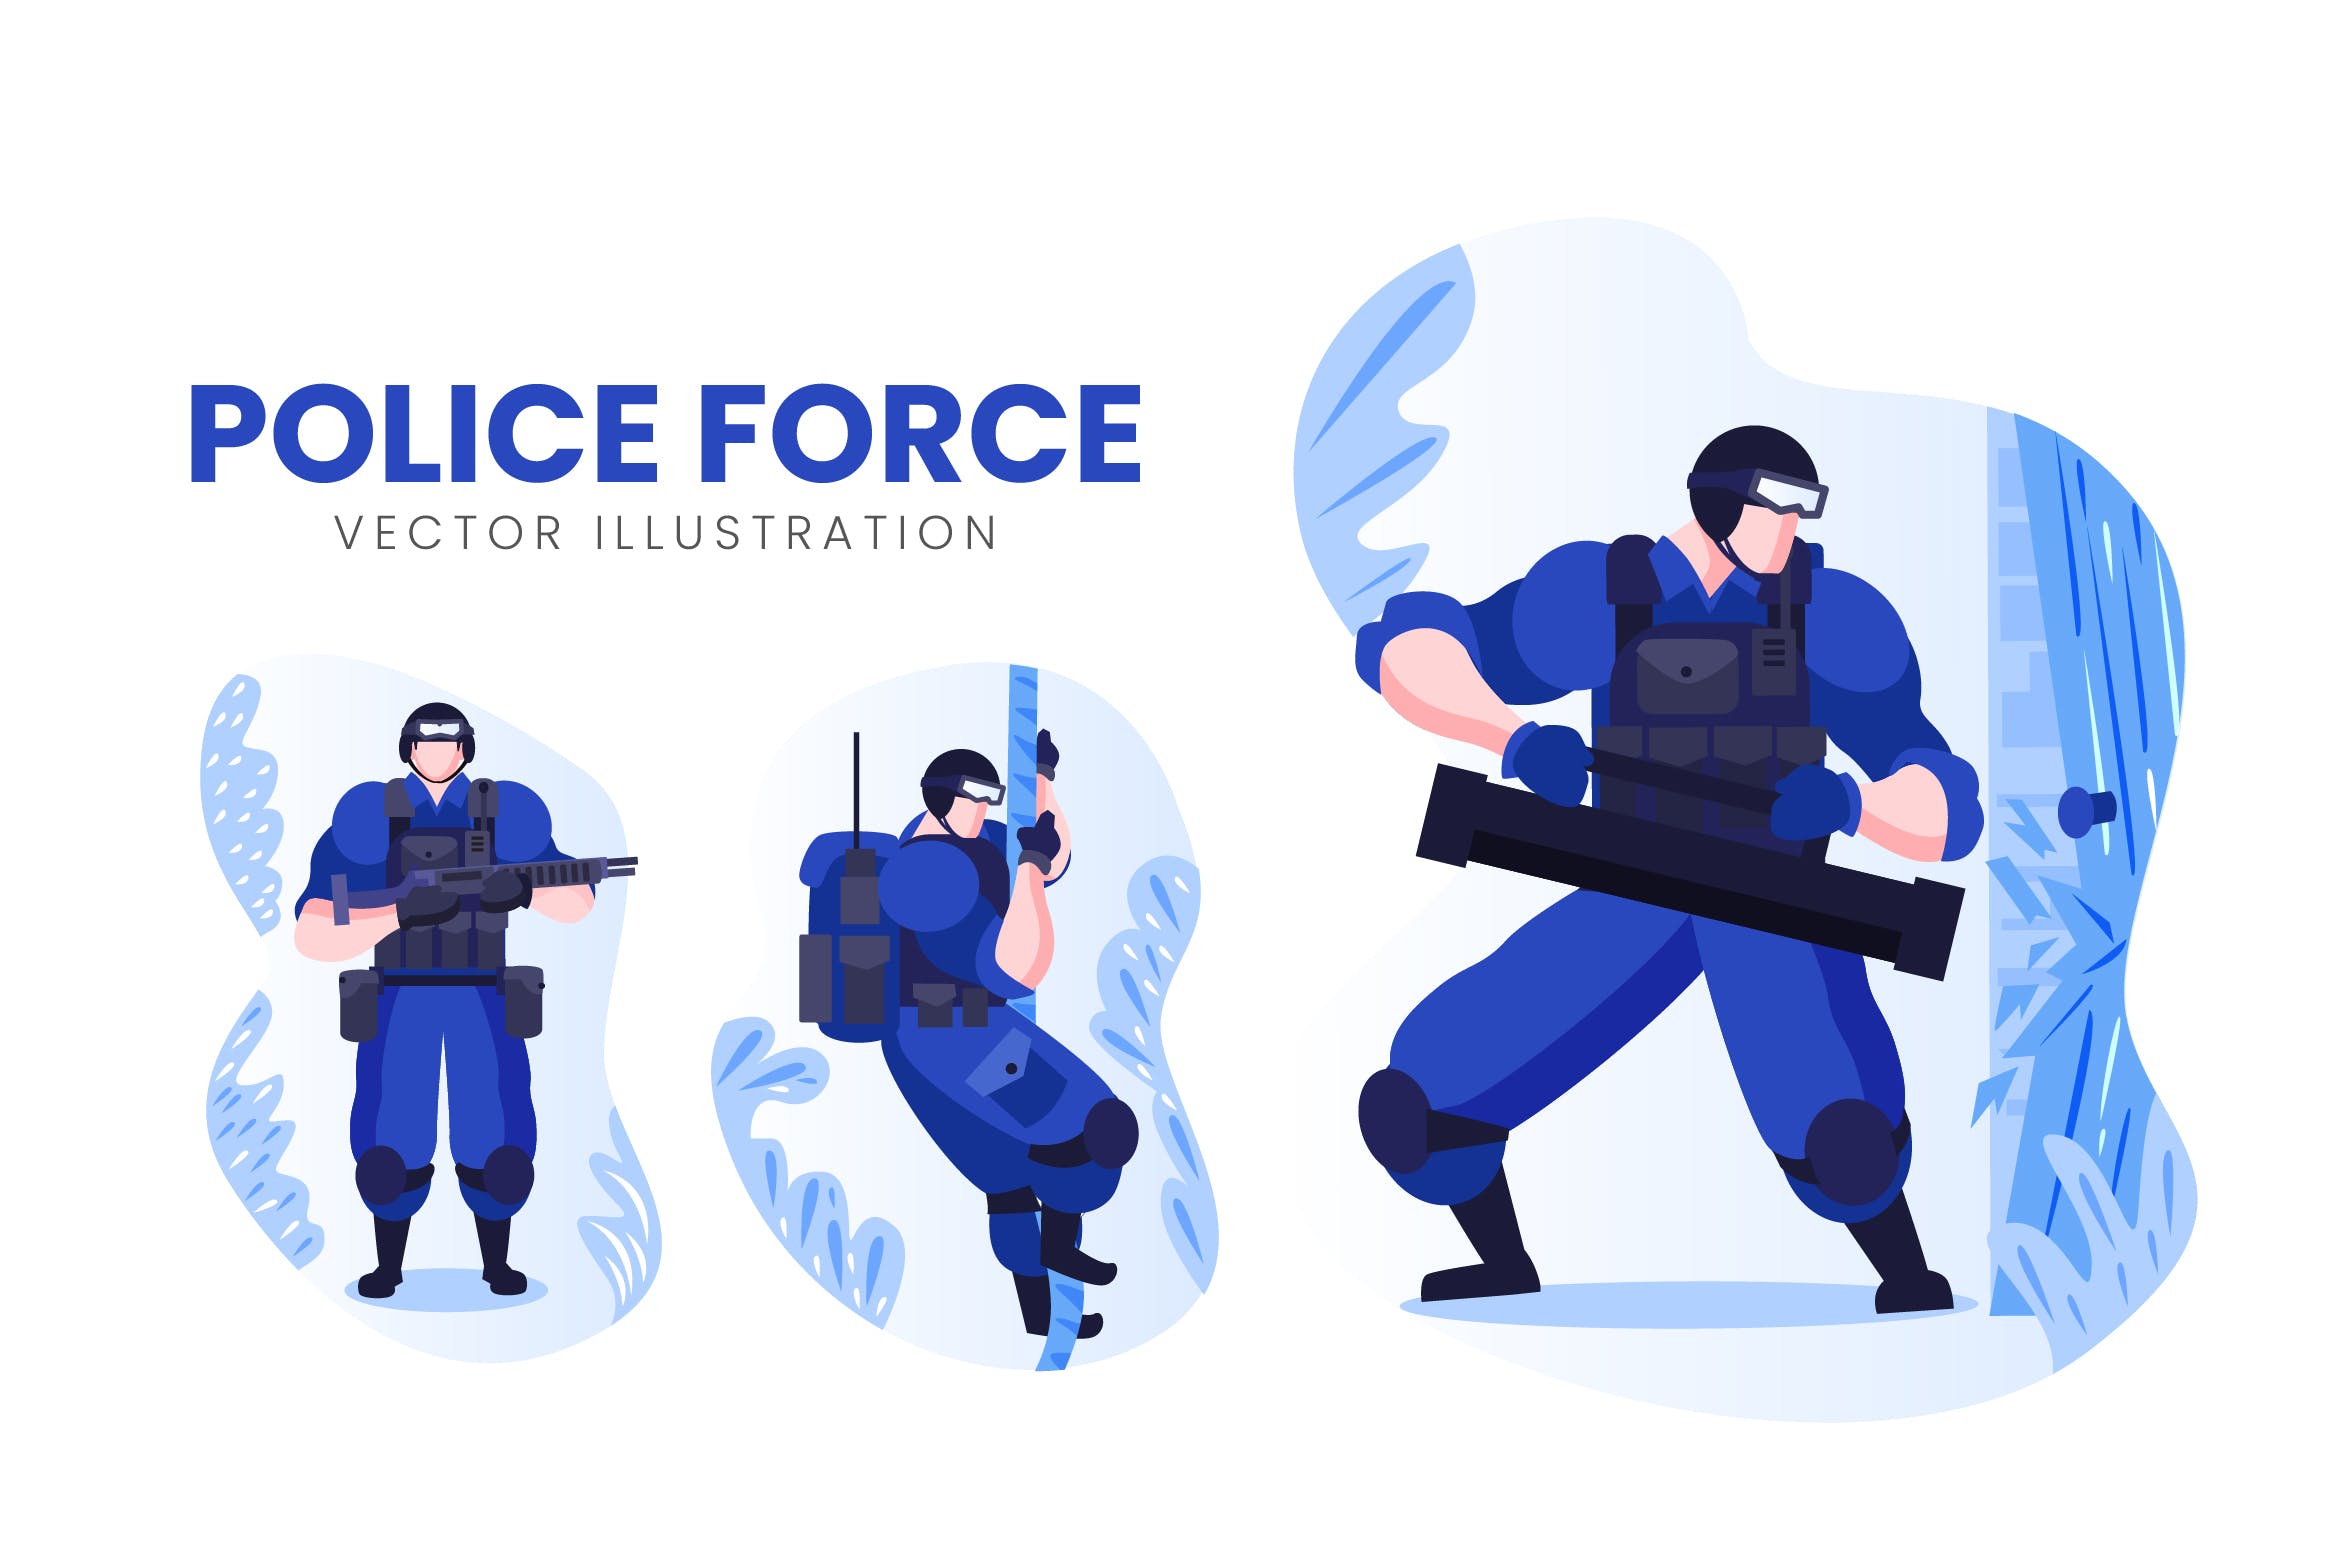 警察人物形象素材库精选手绘插画矢量素材 Police Force Vector Character Set插图